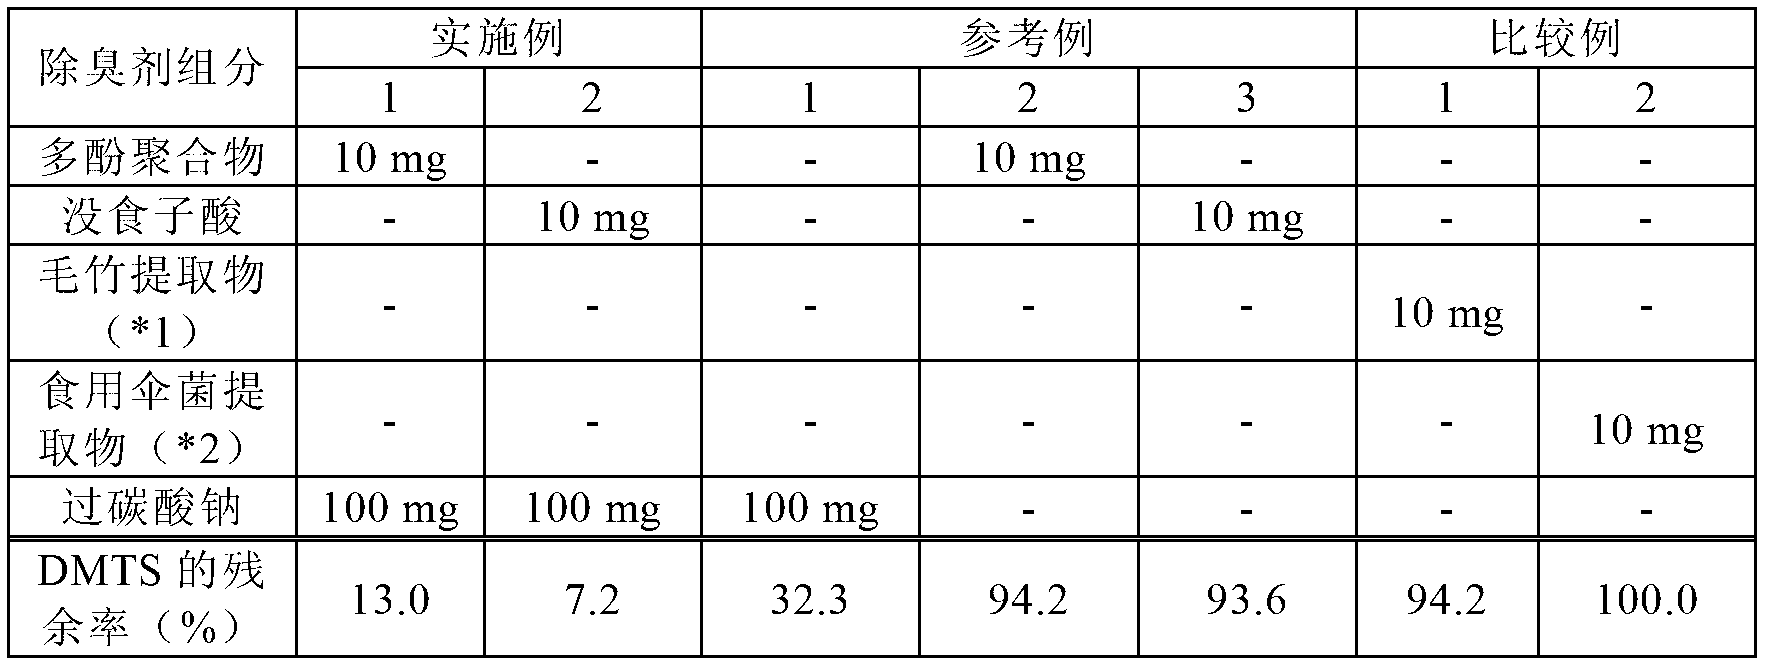 Deodorant composition for sulfides